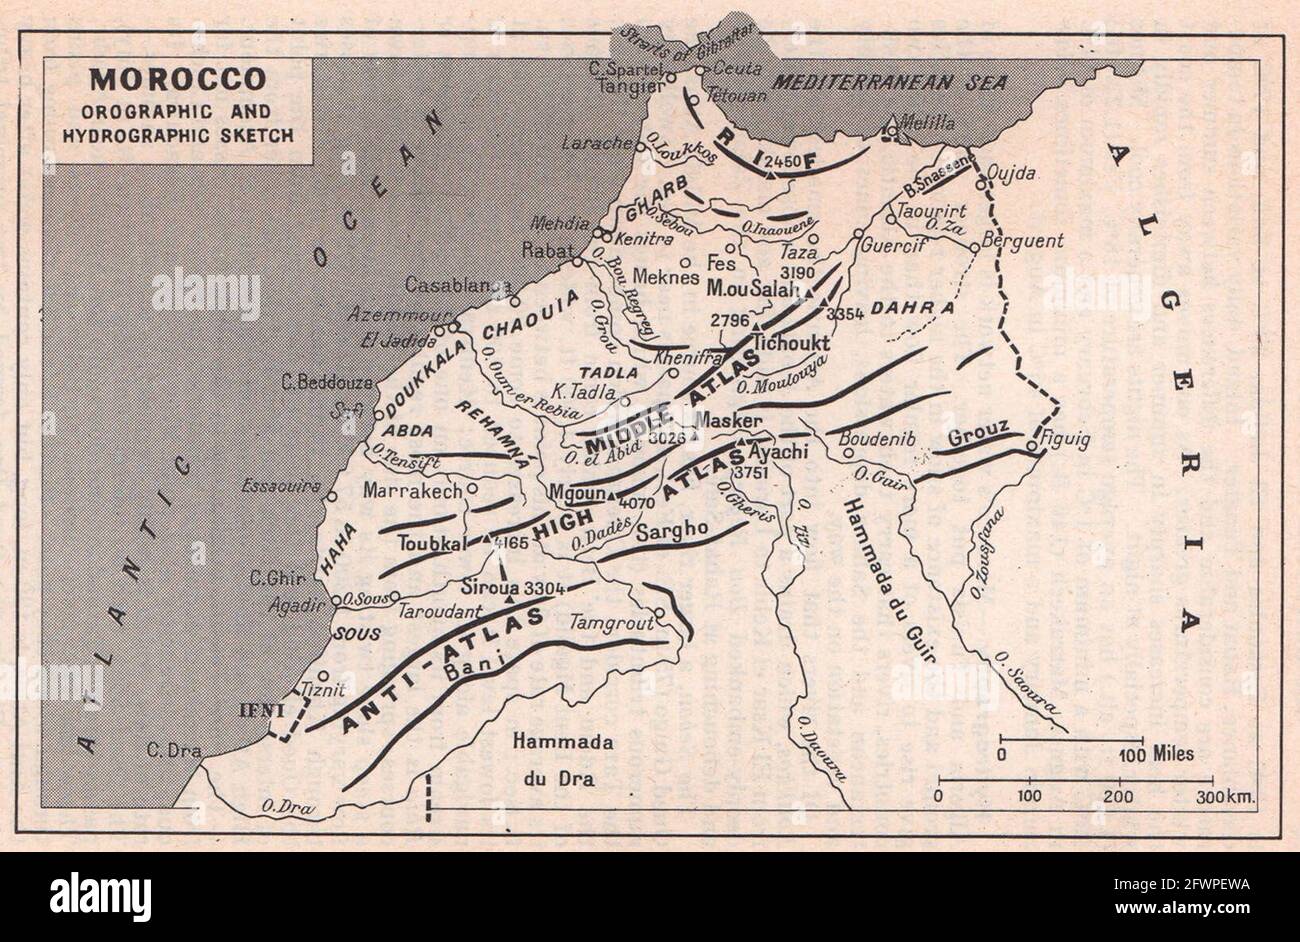 Marruecos - boceto orográfico e hidrográfico 1966 mapa antiguo de la cosecha plan gráfico Foto de stock